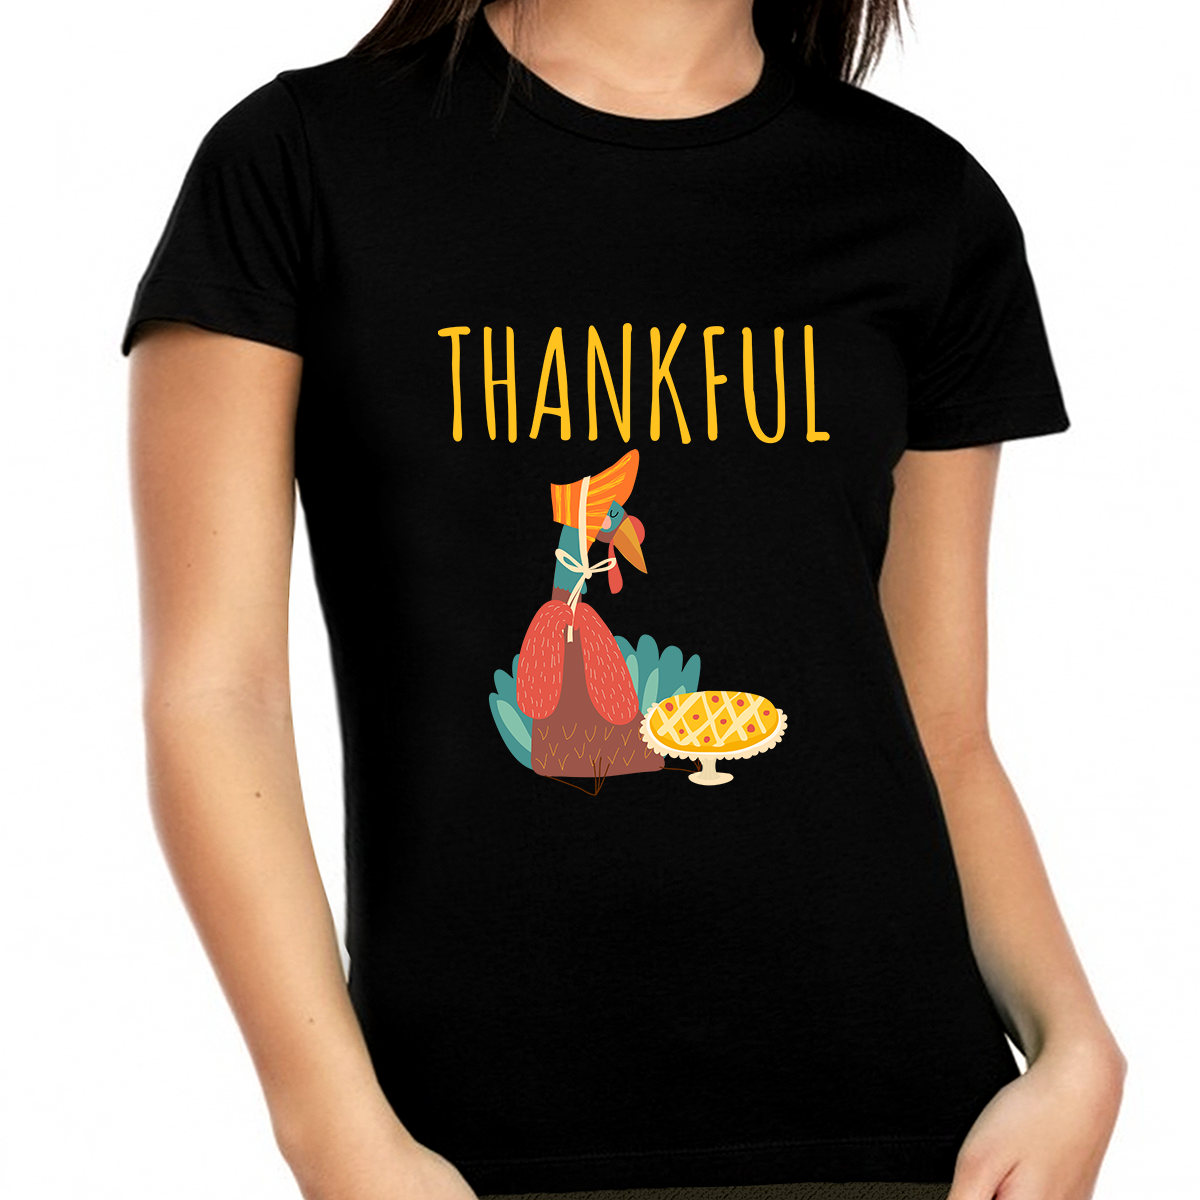 Funny Thanksgiving Shirt Plus Size Turkey Shirt Cute Fall Shirts Women Plus Size Thankful Shirts for Women